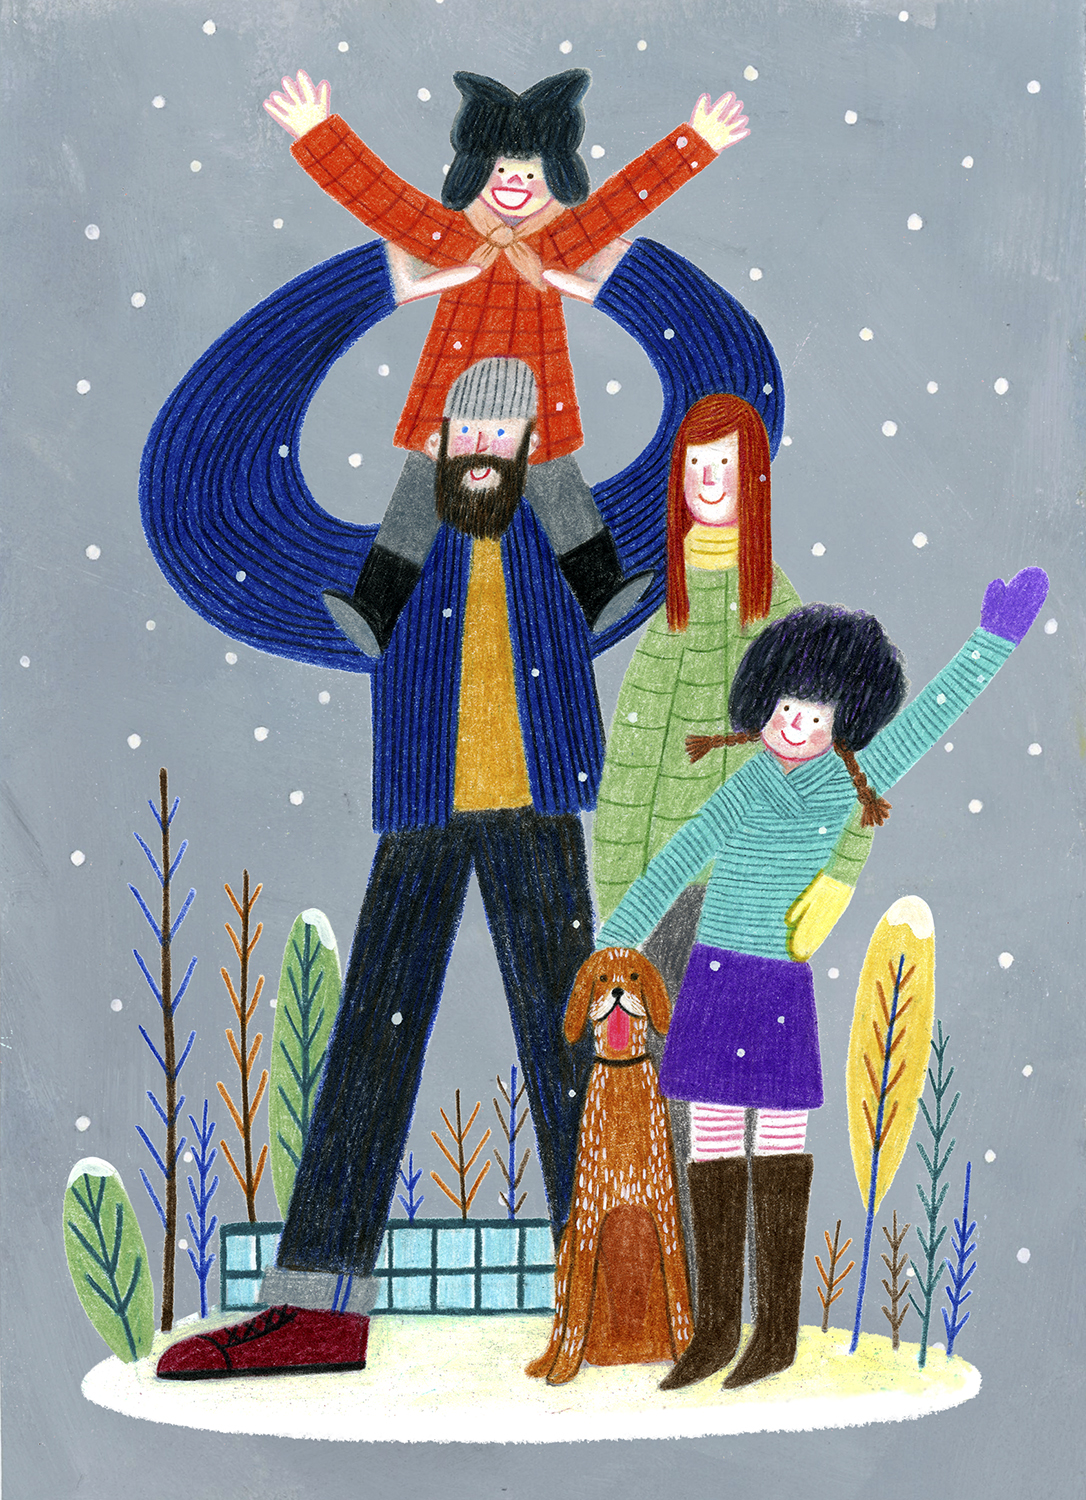 Family Portrait illustration by Yinfan Huang